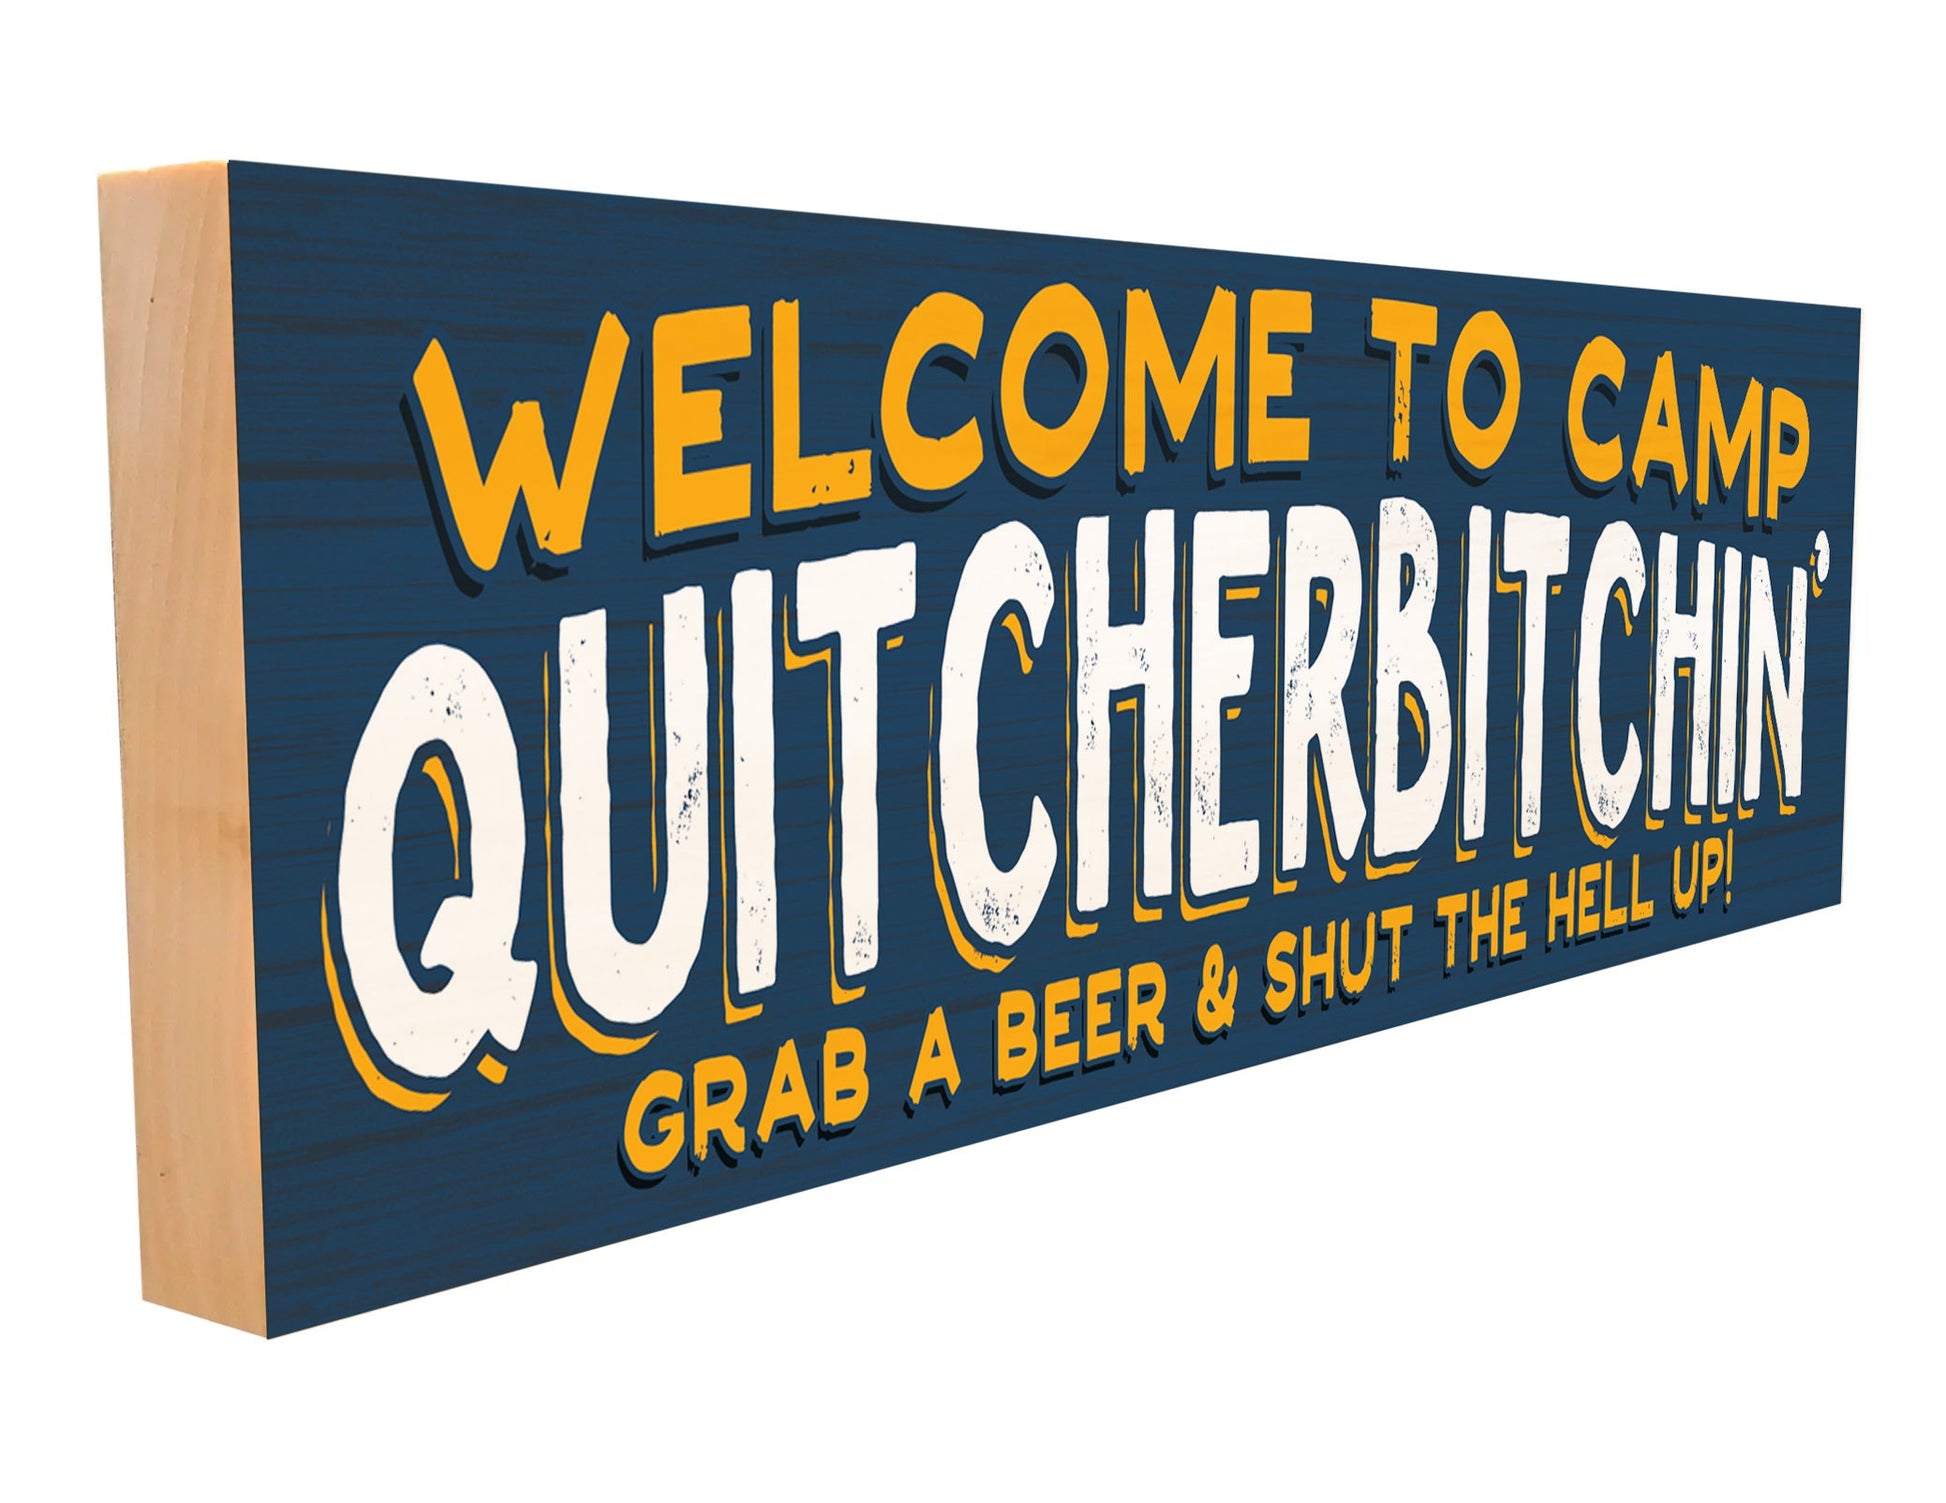 Welcome to Camp QuitcherBitchin.